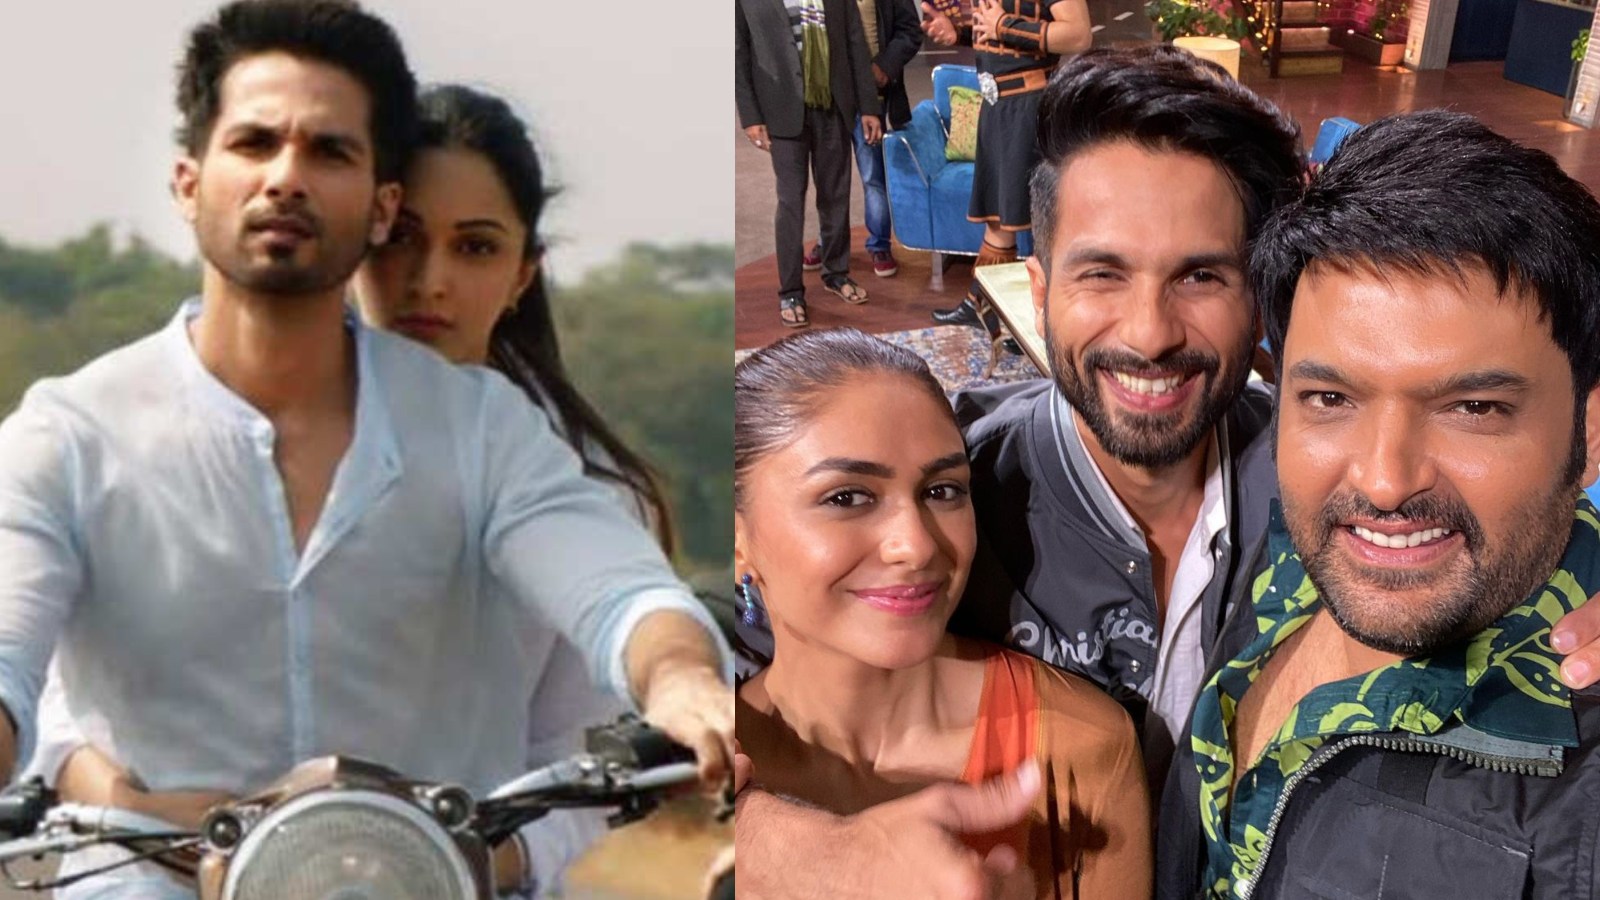 "Aapko kis baat ki jaldi hai?" Kapil Sharma asks Shahid Kapoor about romancing actresses on moving bikes in films